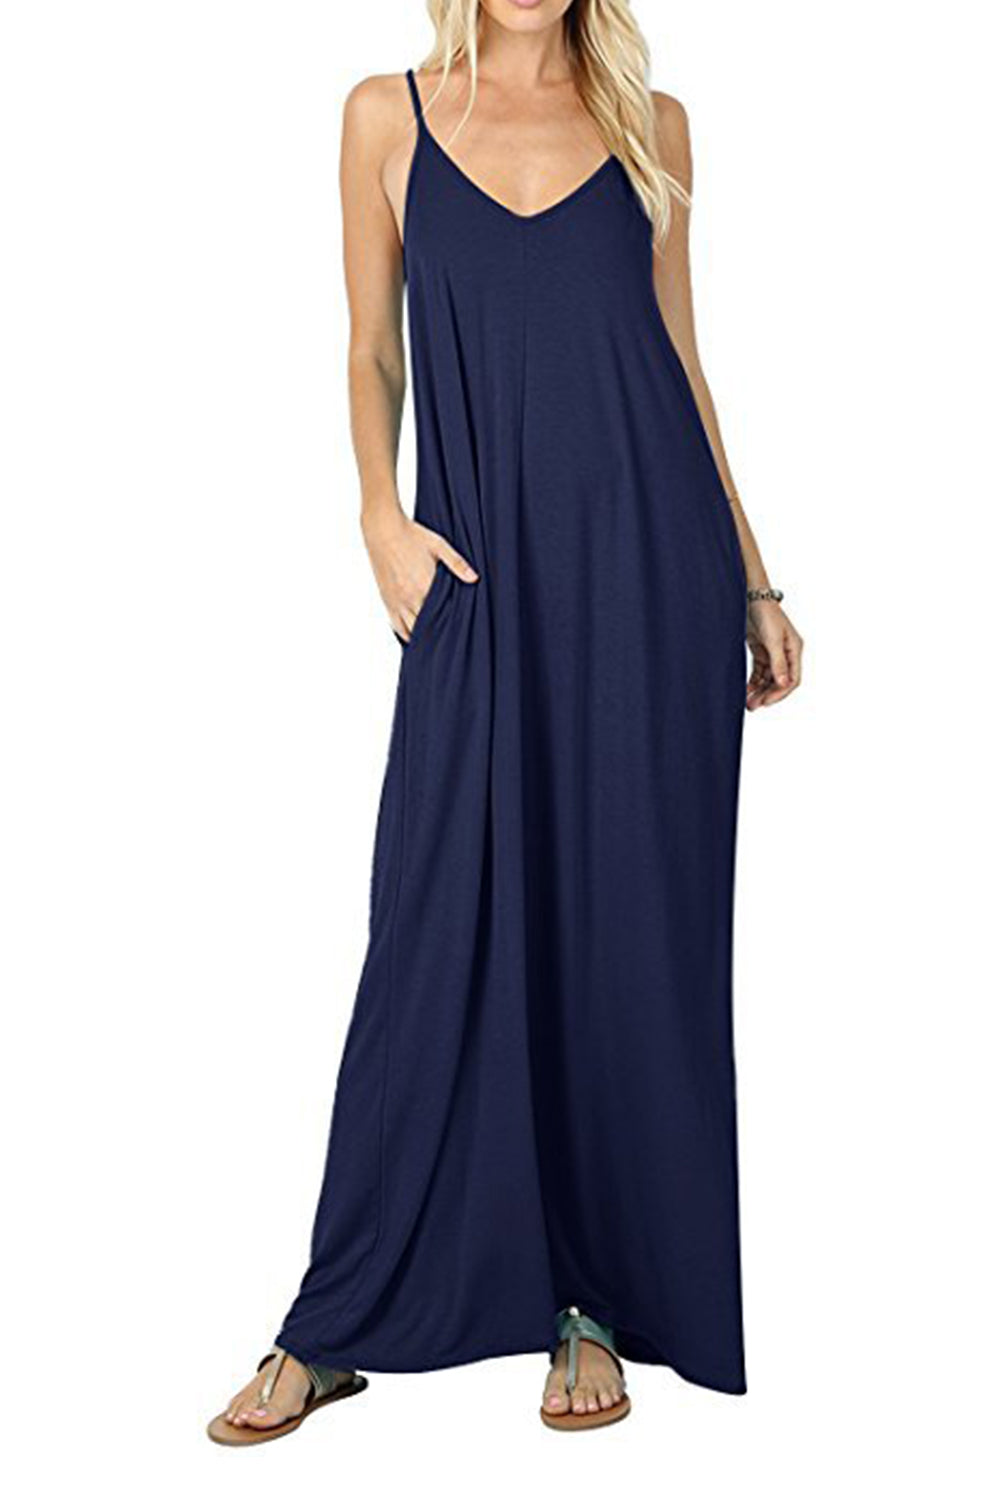 plain blue maxi dress